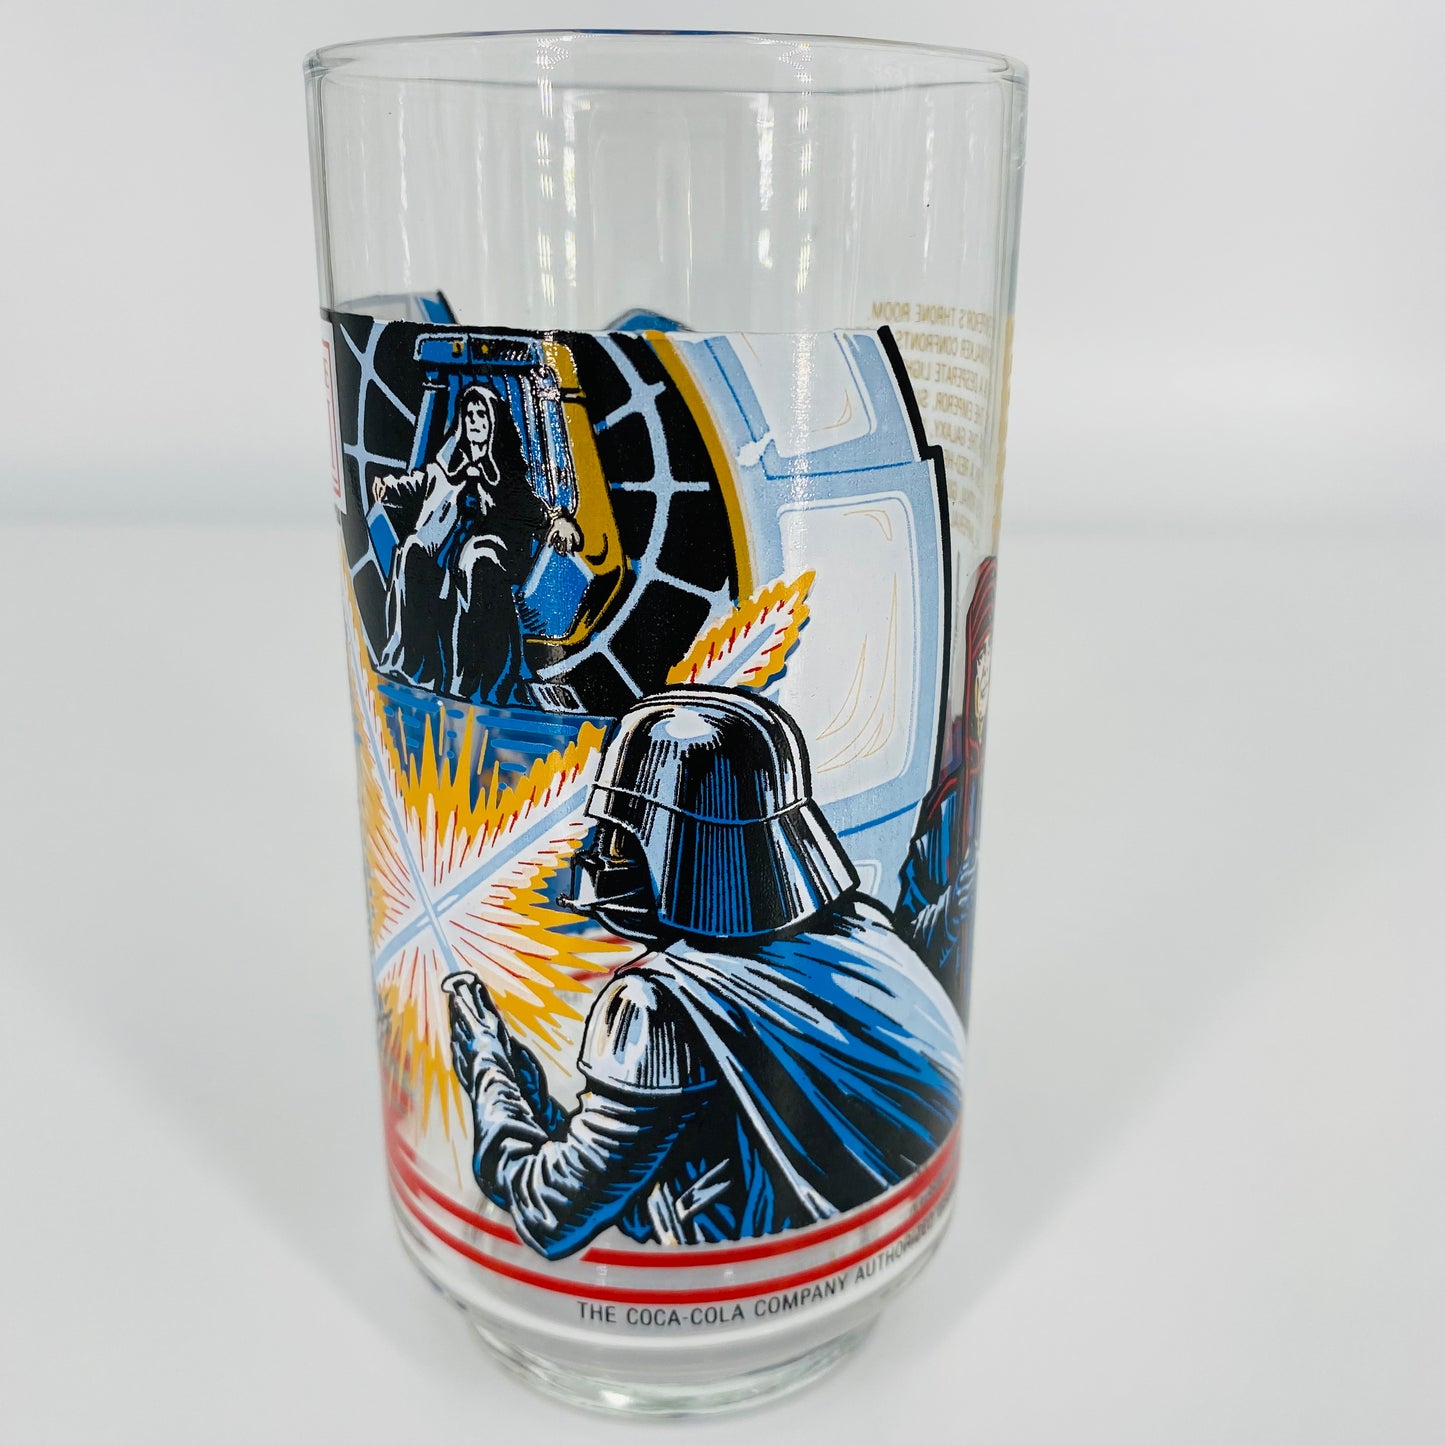 Burger King Coca-Cola Return of the Jedi Luke VS Vader glass (1983)